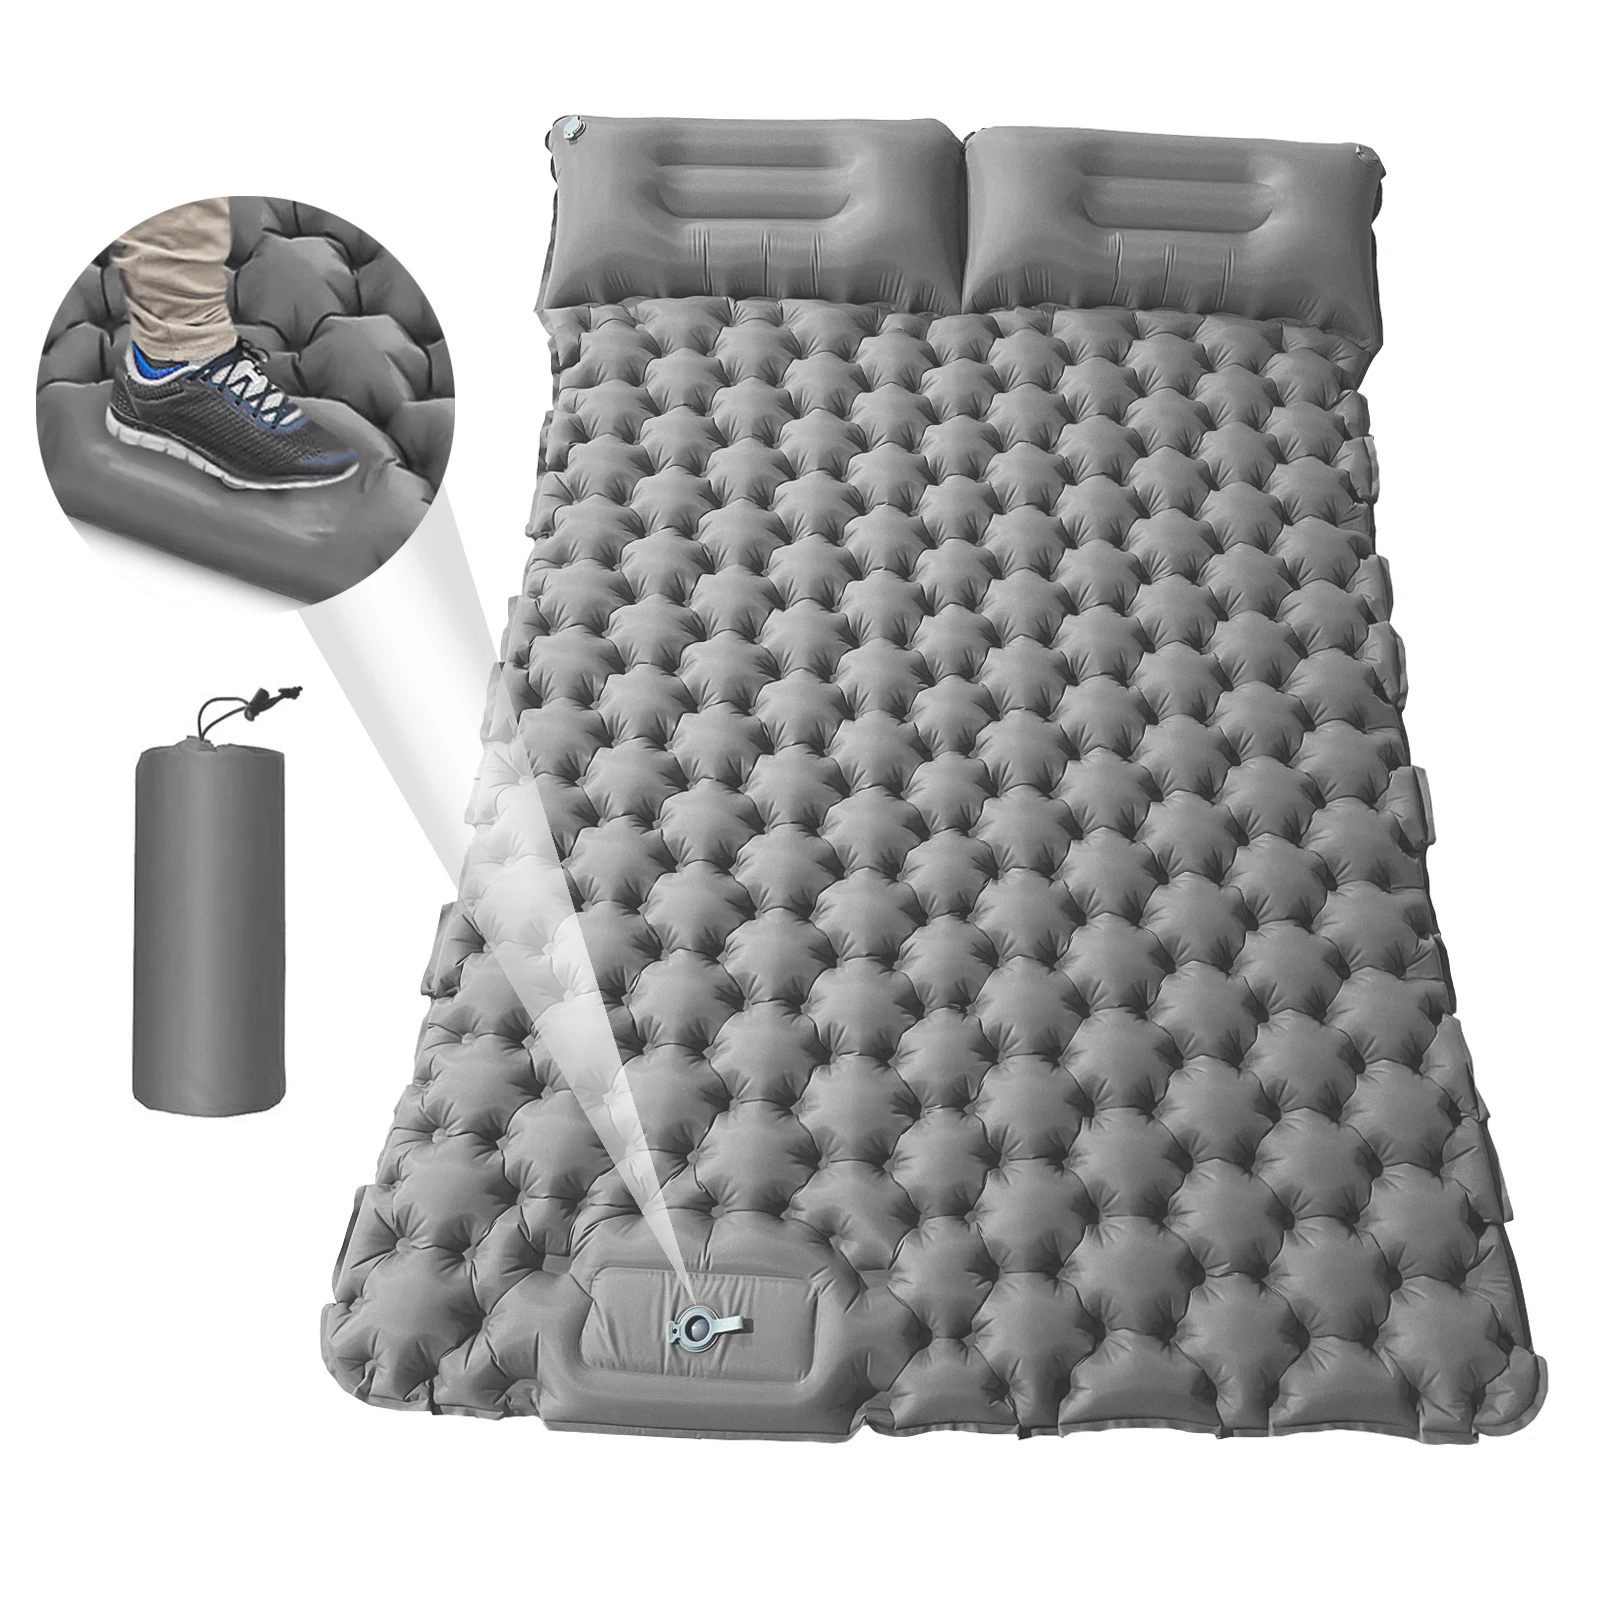 

2 Person Outdoor Sleeping Pad Camping Inflatable Mattress with Pillows Travel Mat Folding Bed Ultralight Air Cushion Trekking